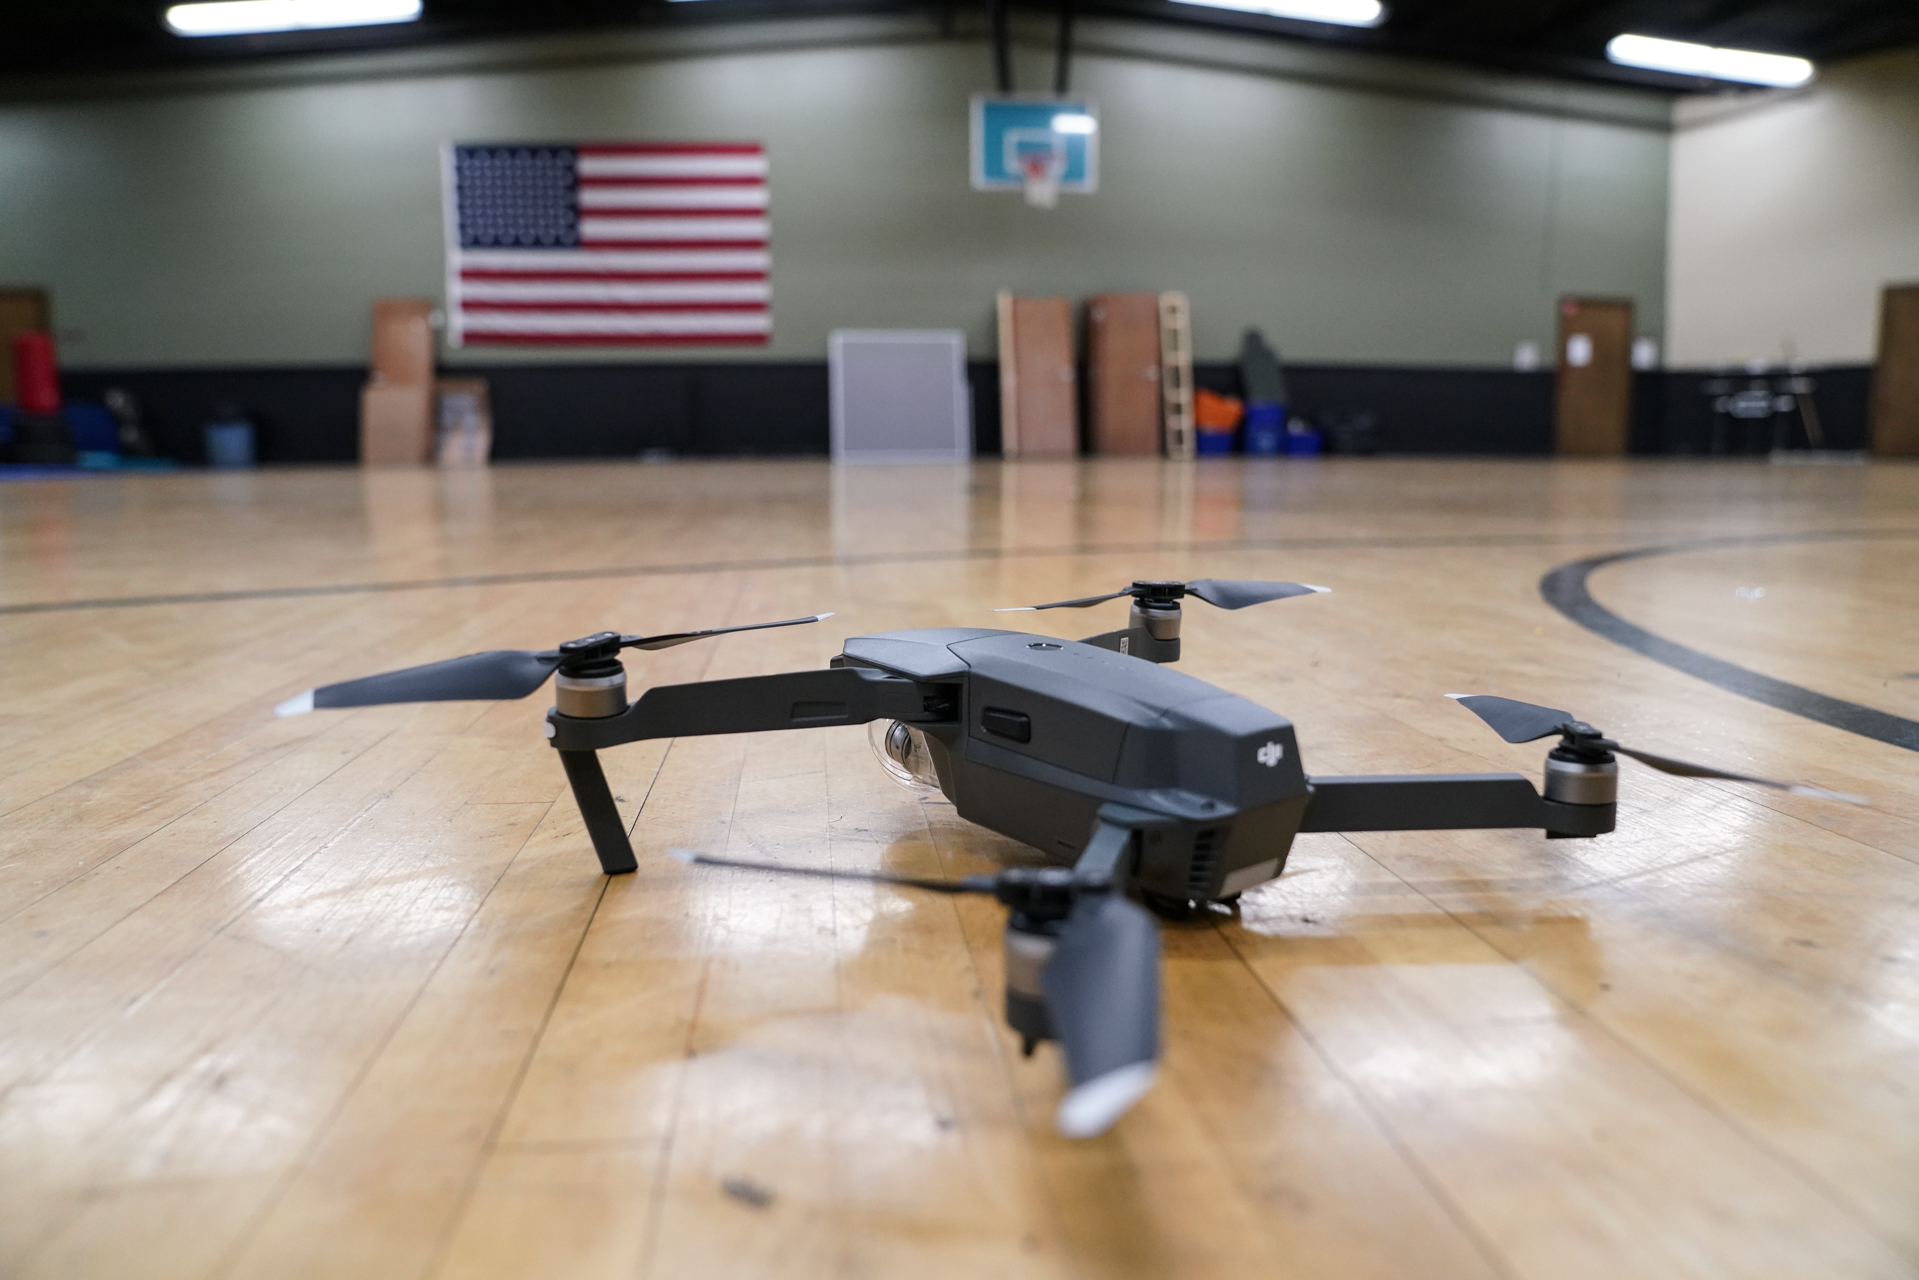 Drones, Guns How Kentucky Police Spend Seized Cash